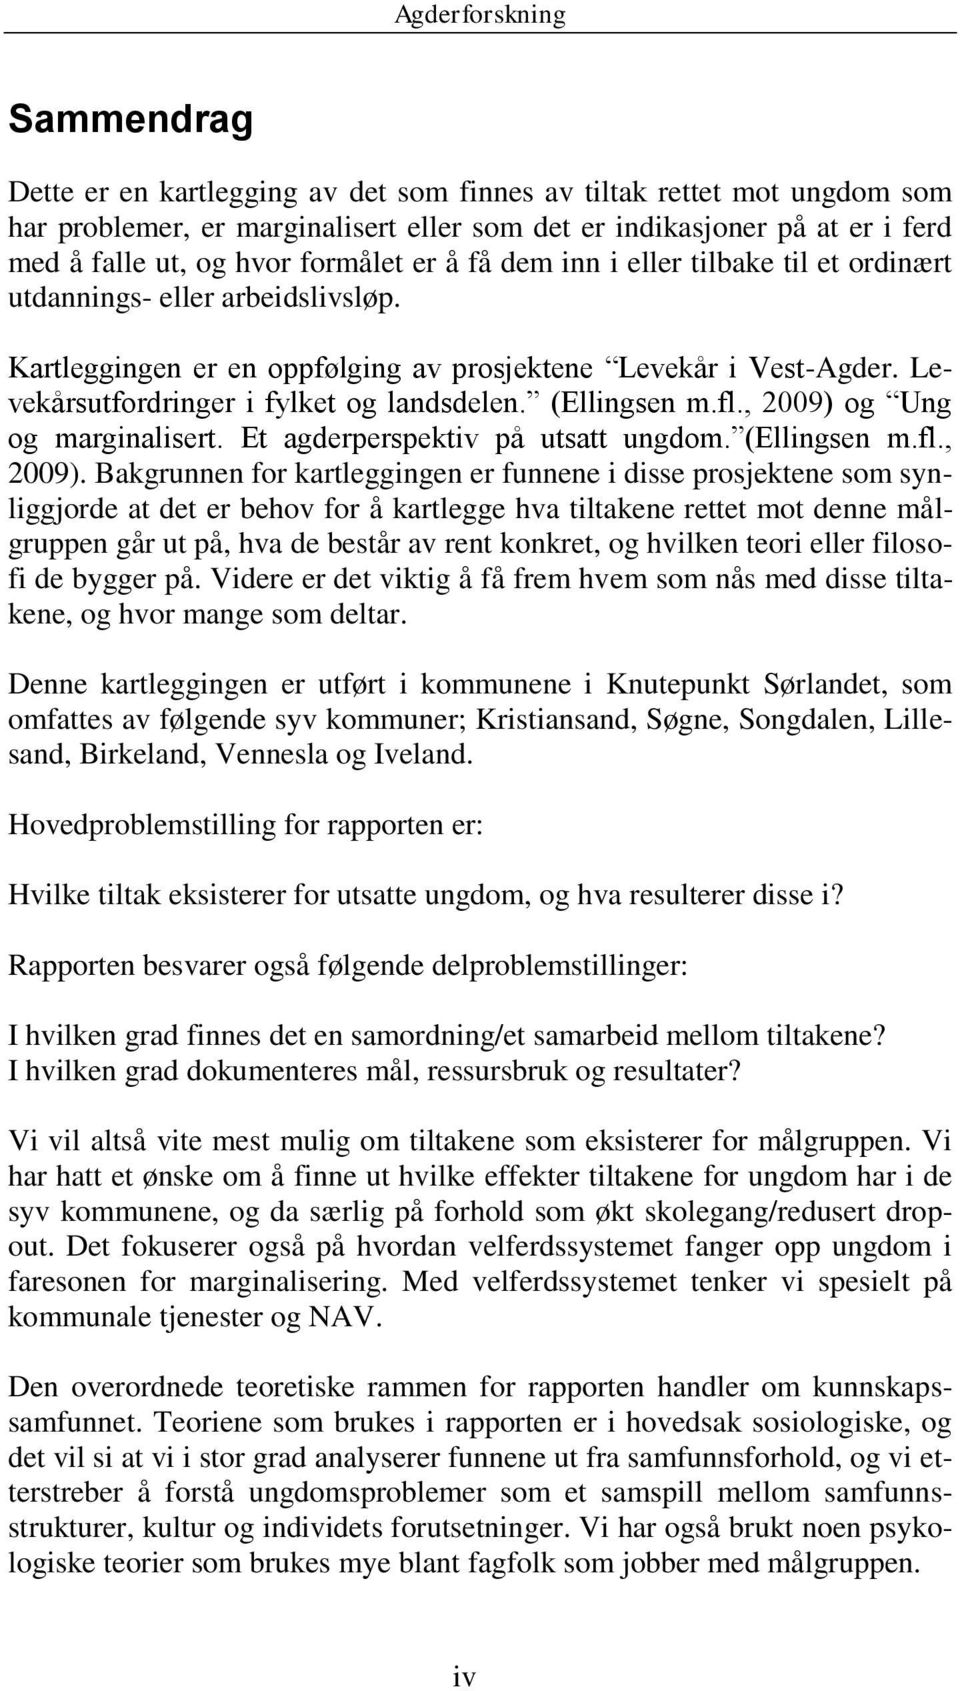 (Ellingsen m.fl., 2009) 